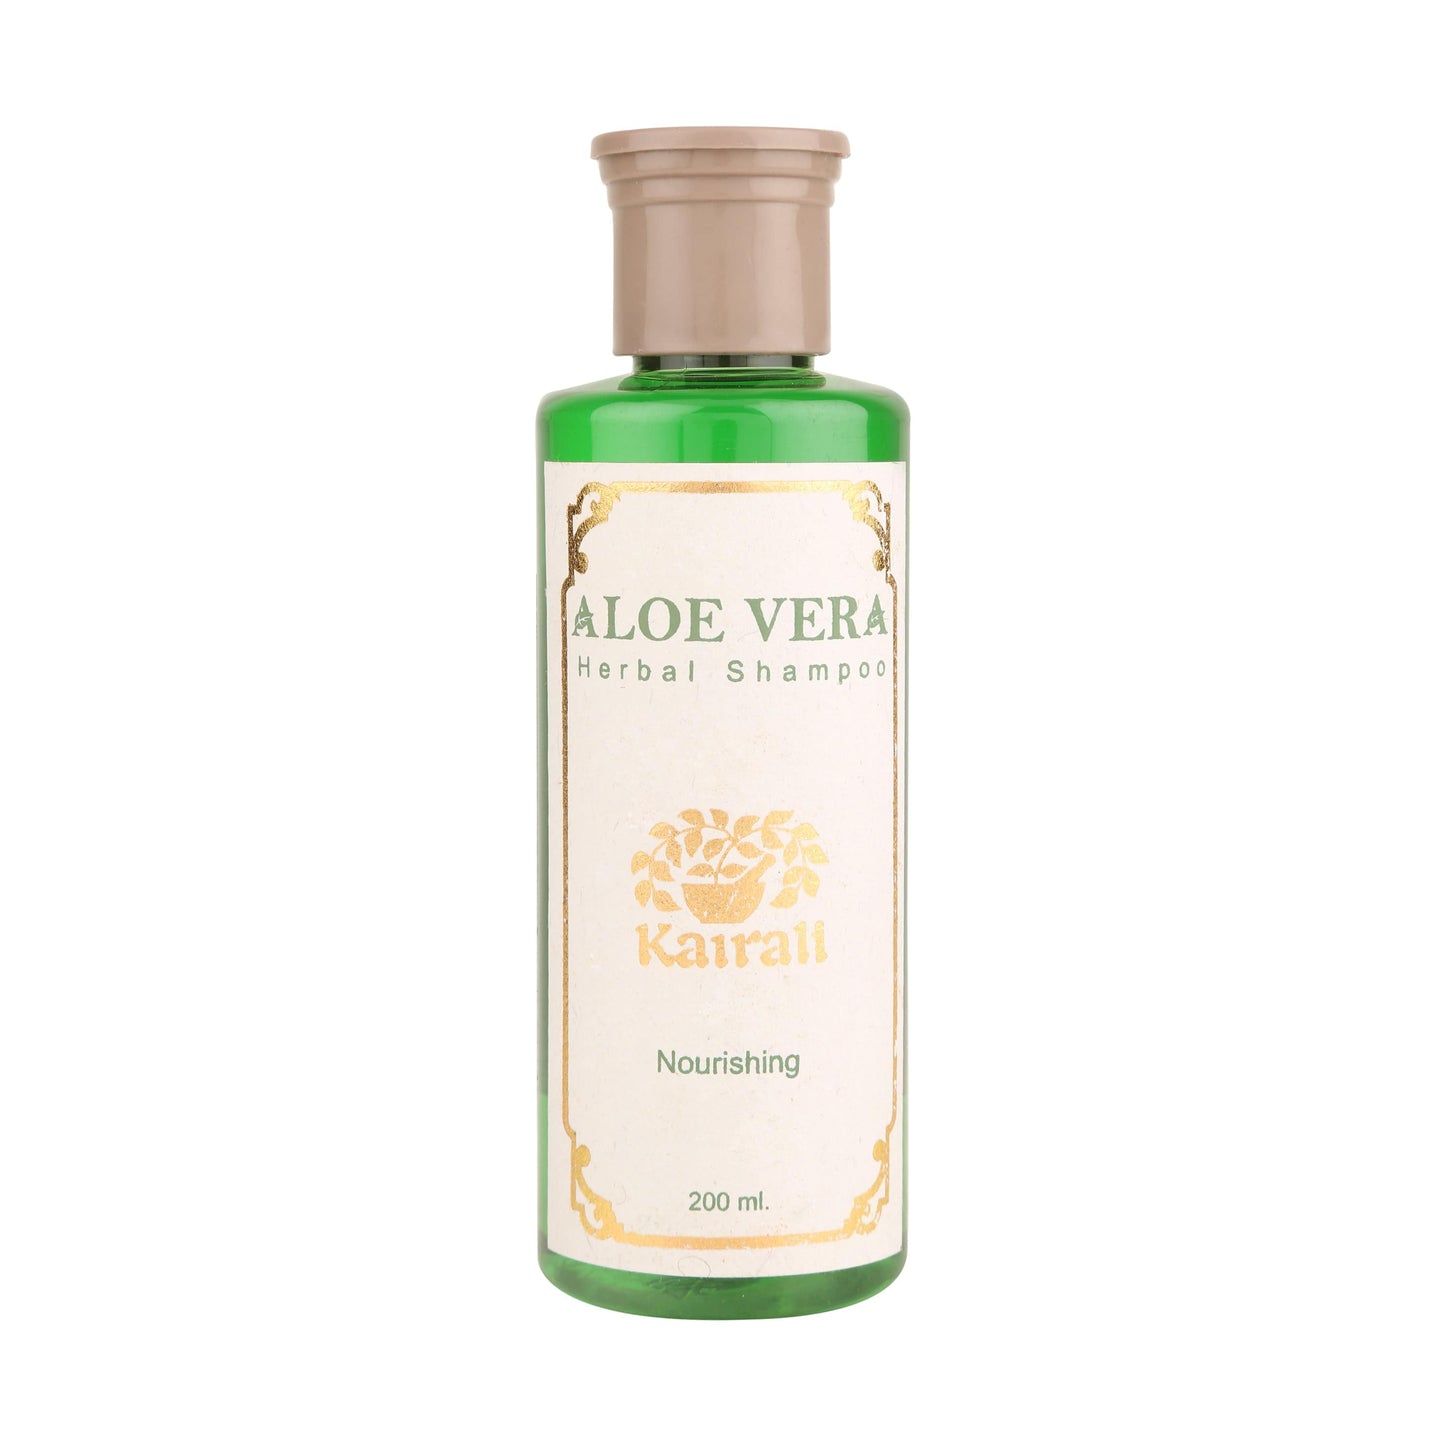 Kairali Ayurveda Group Kairali Aloe Vera Shampoo - Herbal Shampoo to Repair Dry and Damaged Hair (200 ml)